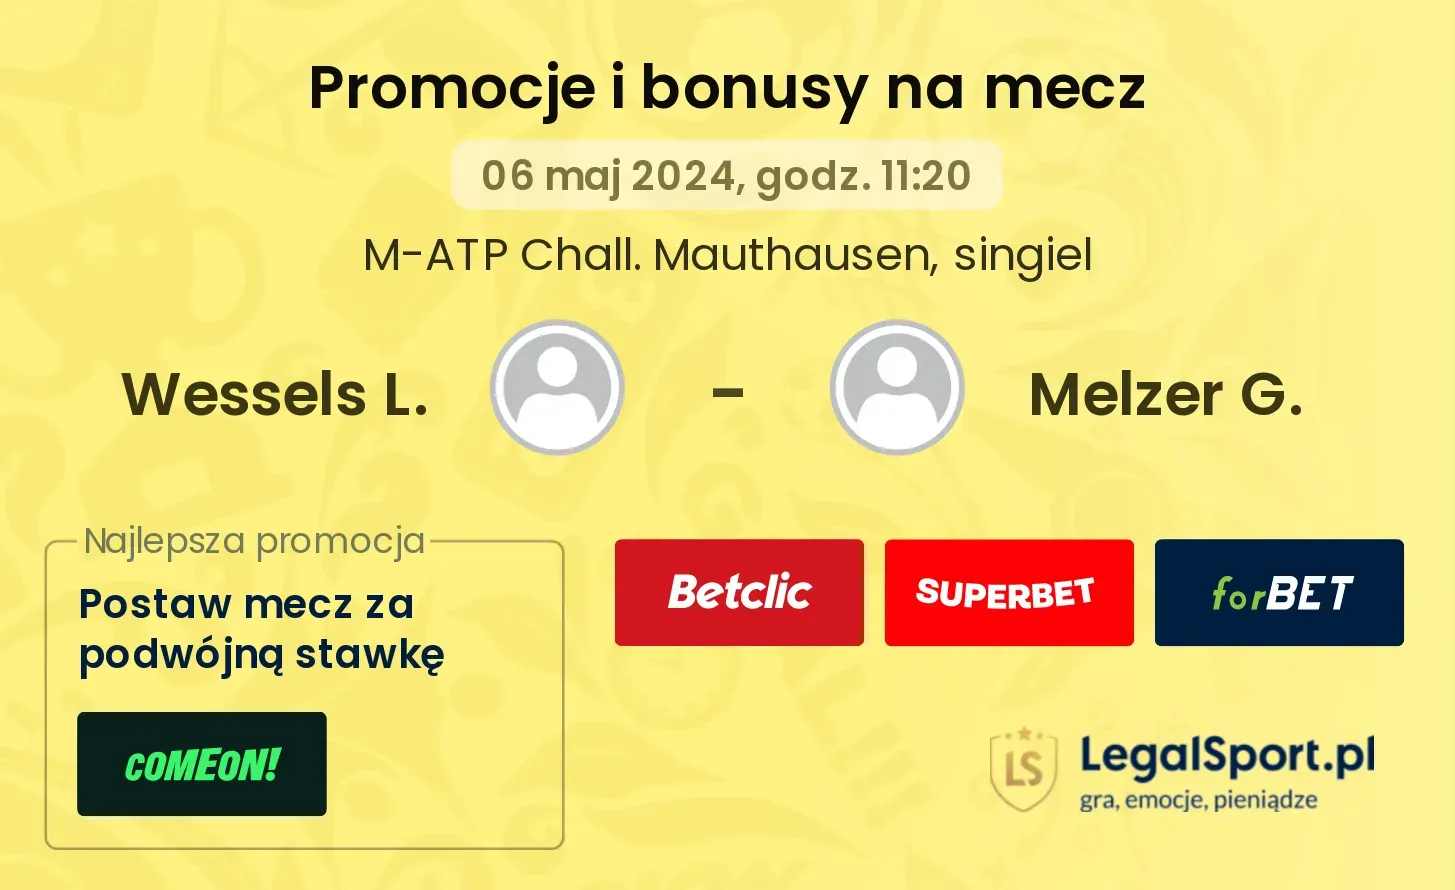 Wessels L. - Melzer G. promocje bonusy na mecz